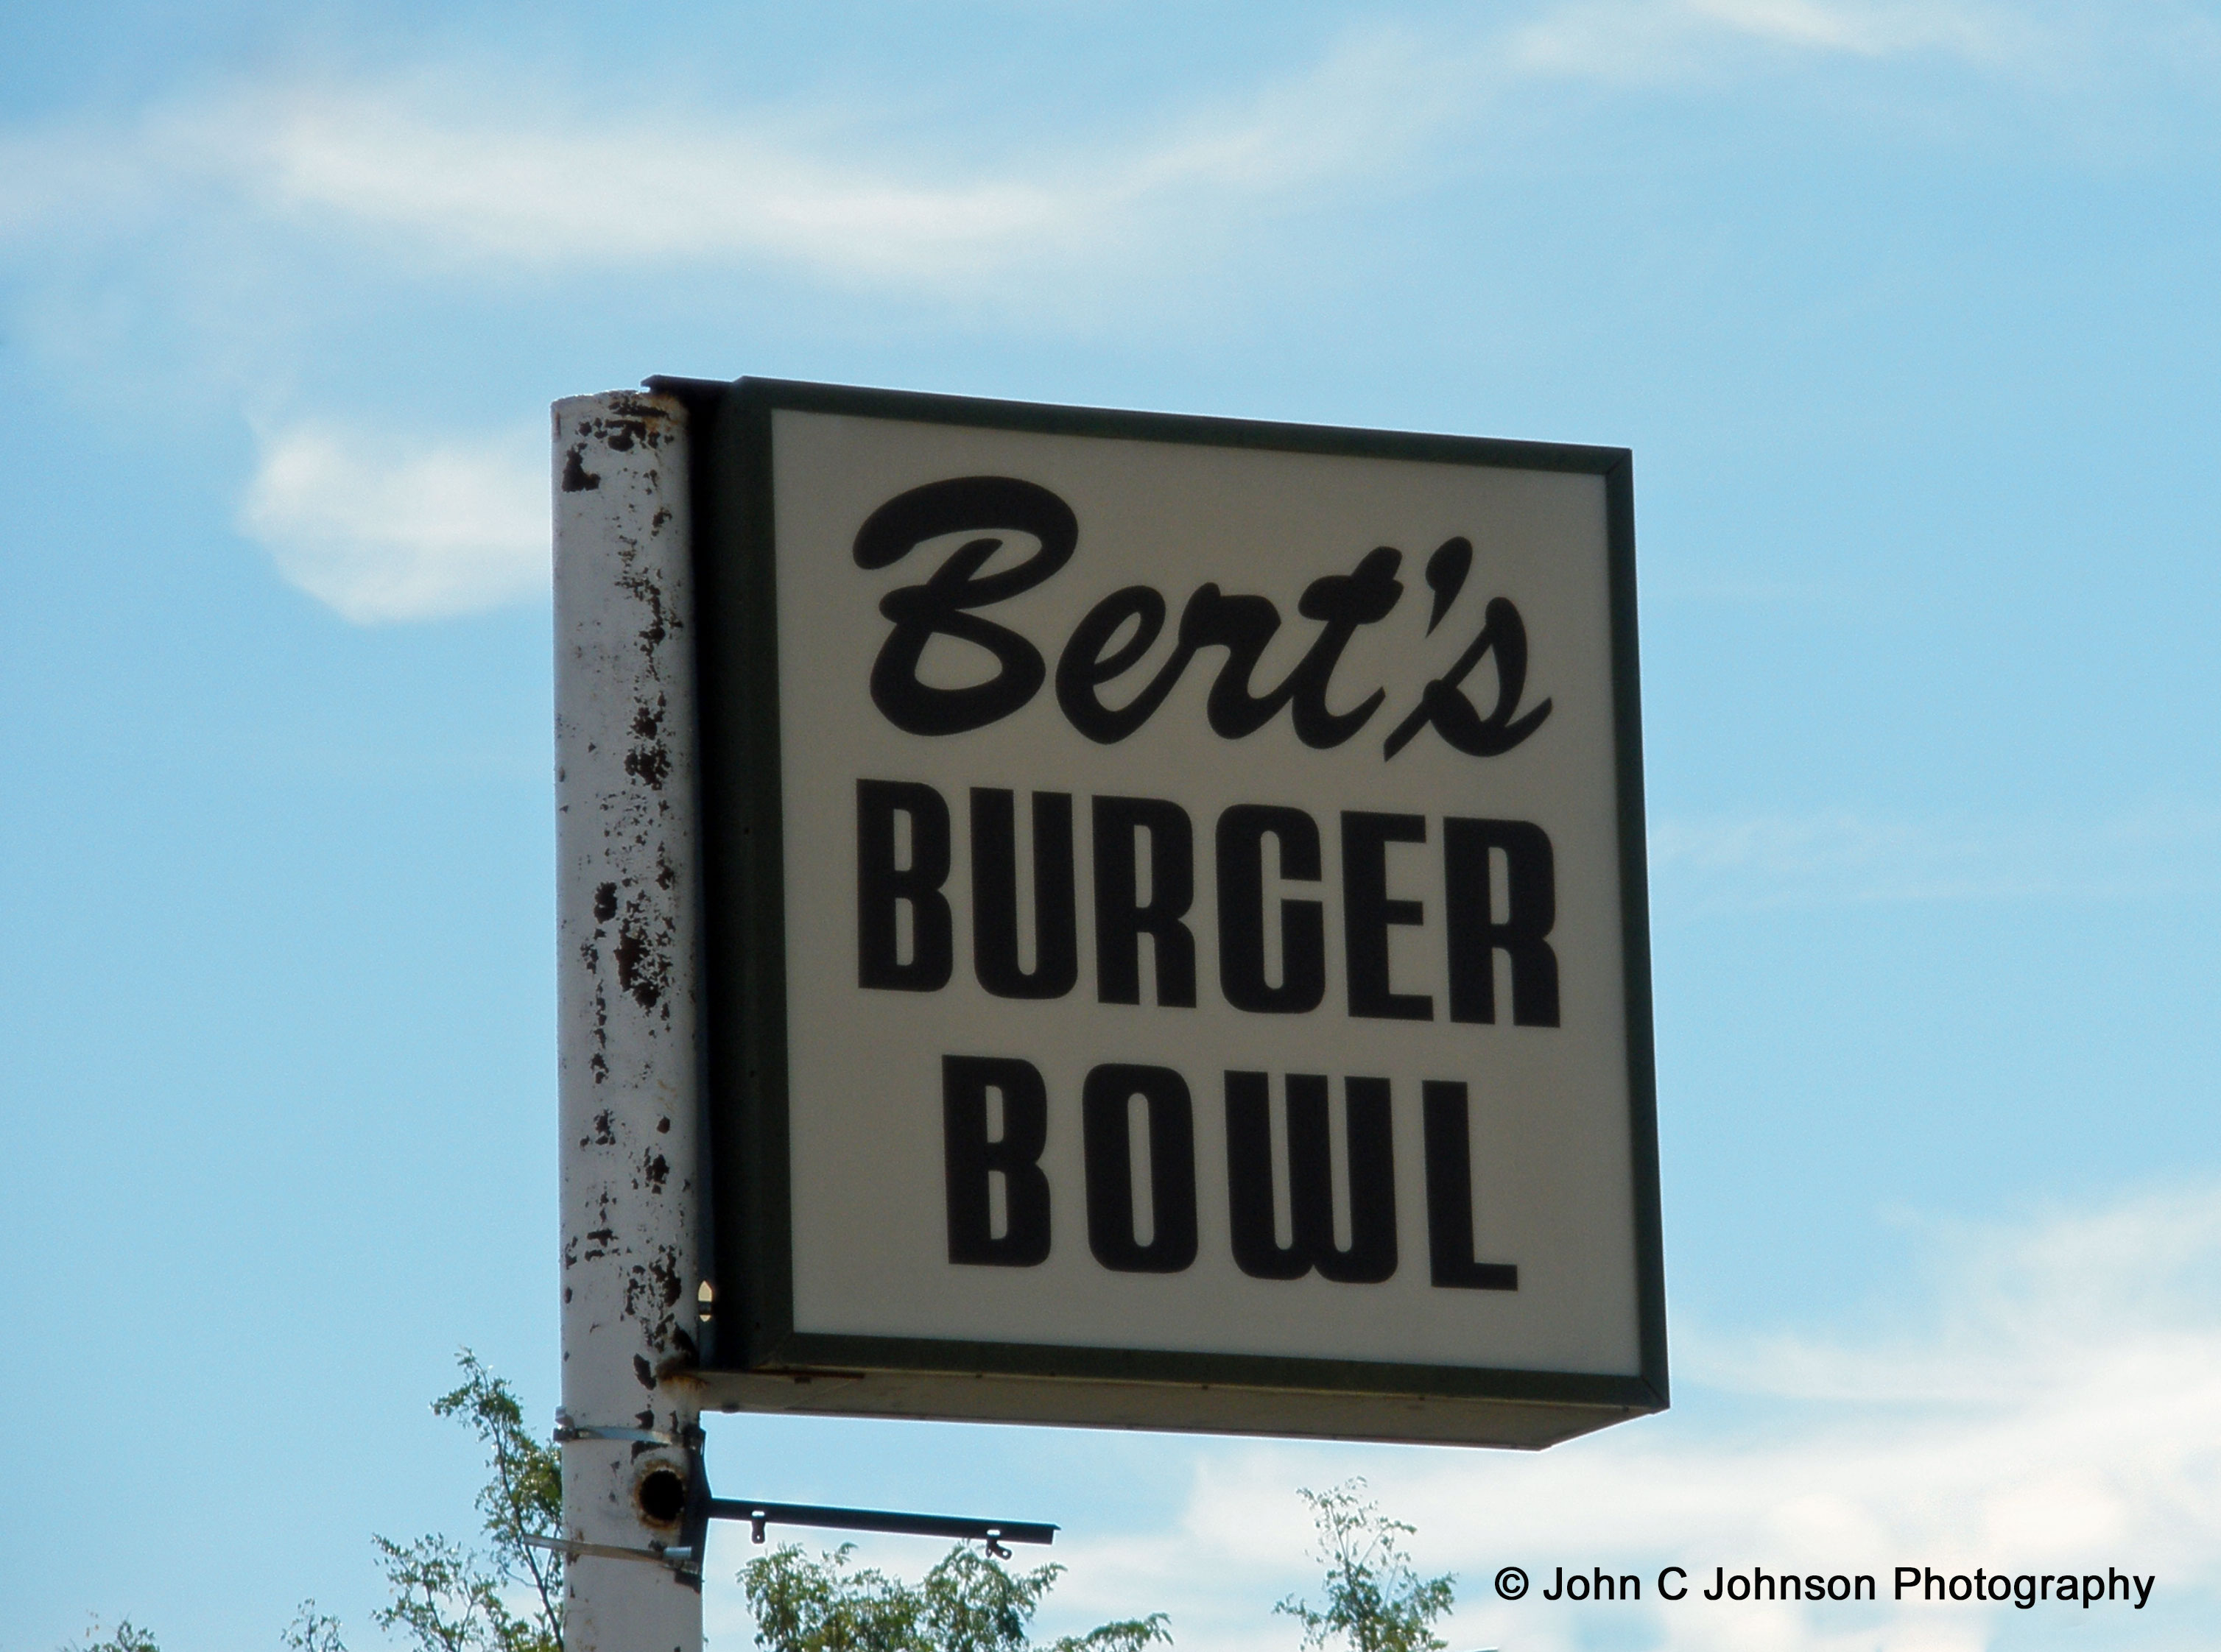 Bert's Burger Bowl Santa Fe, New Mexico